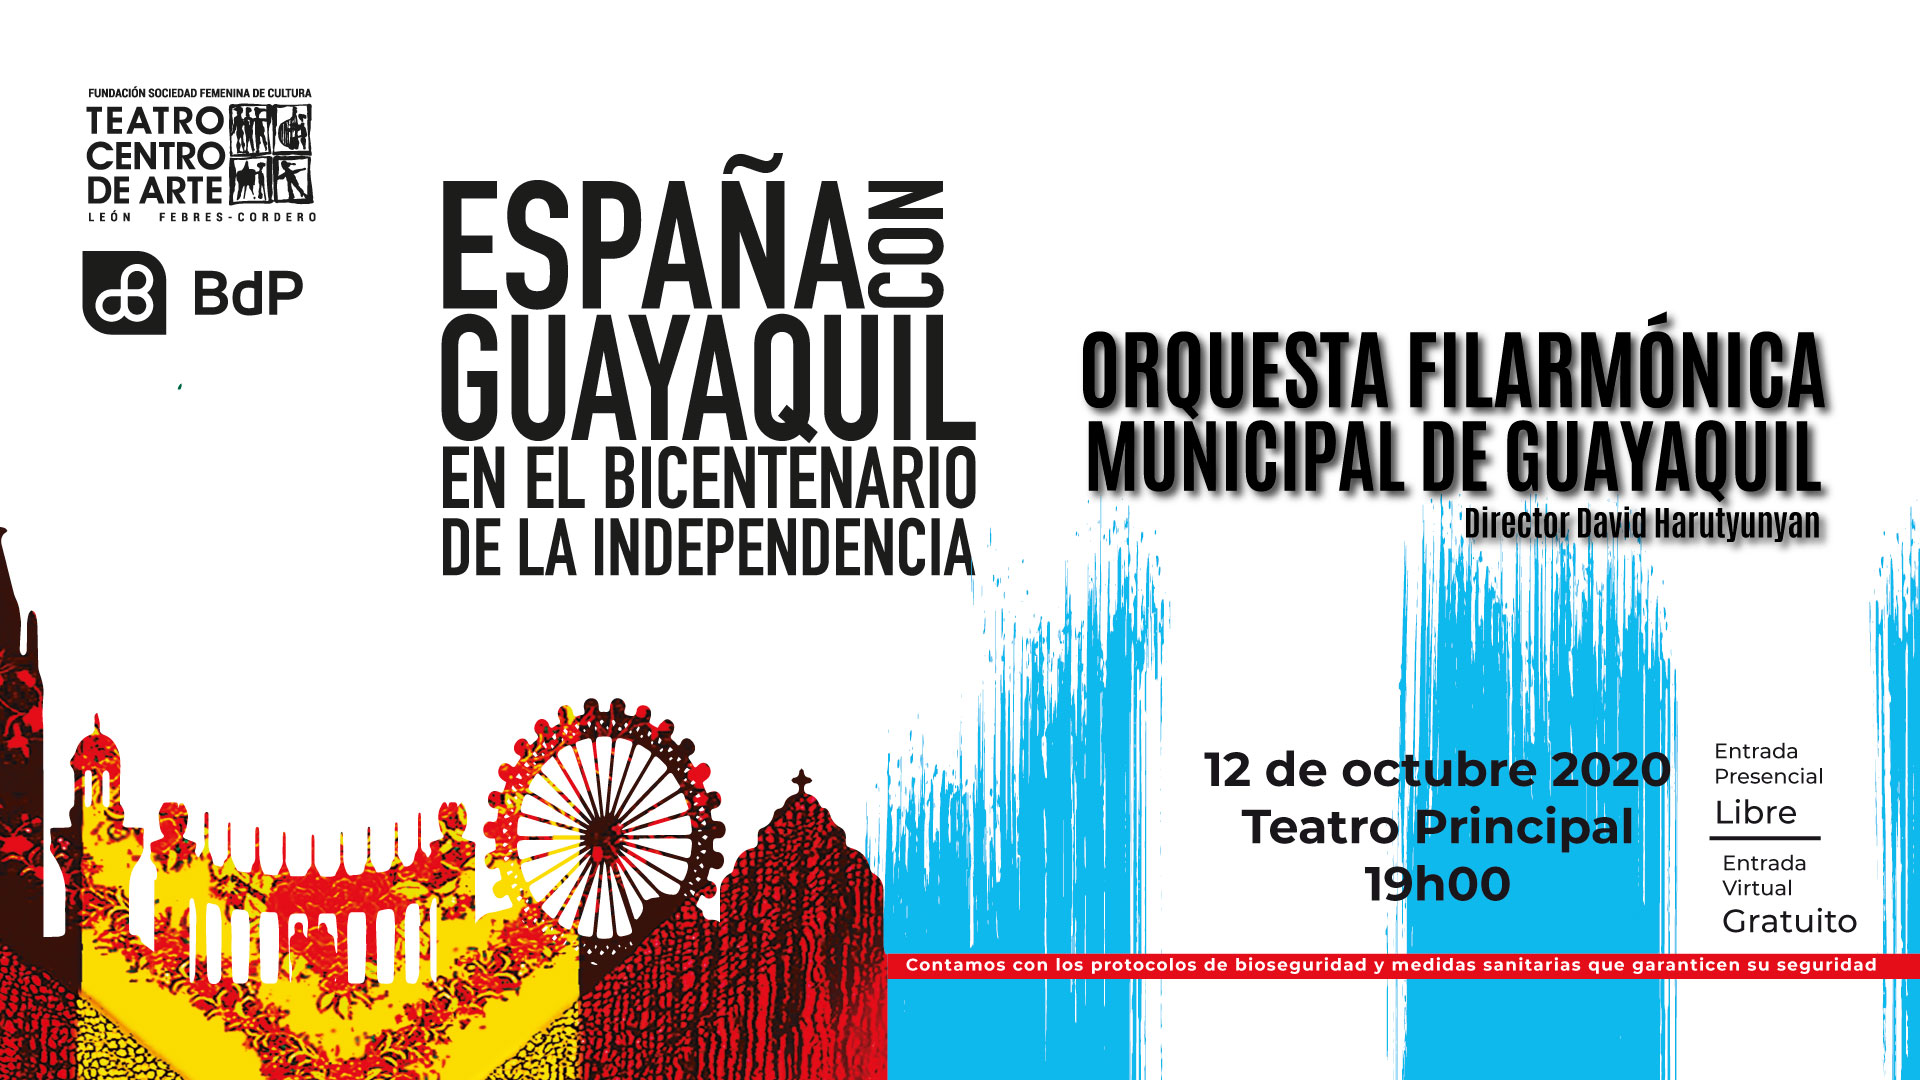 espana-guayaquil-bicentenario-independencia